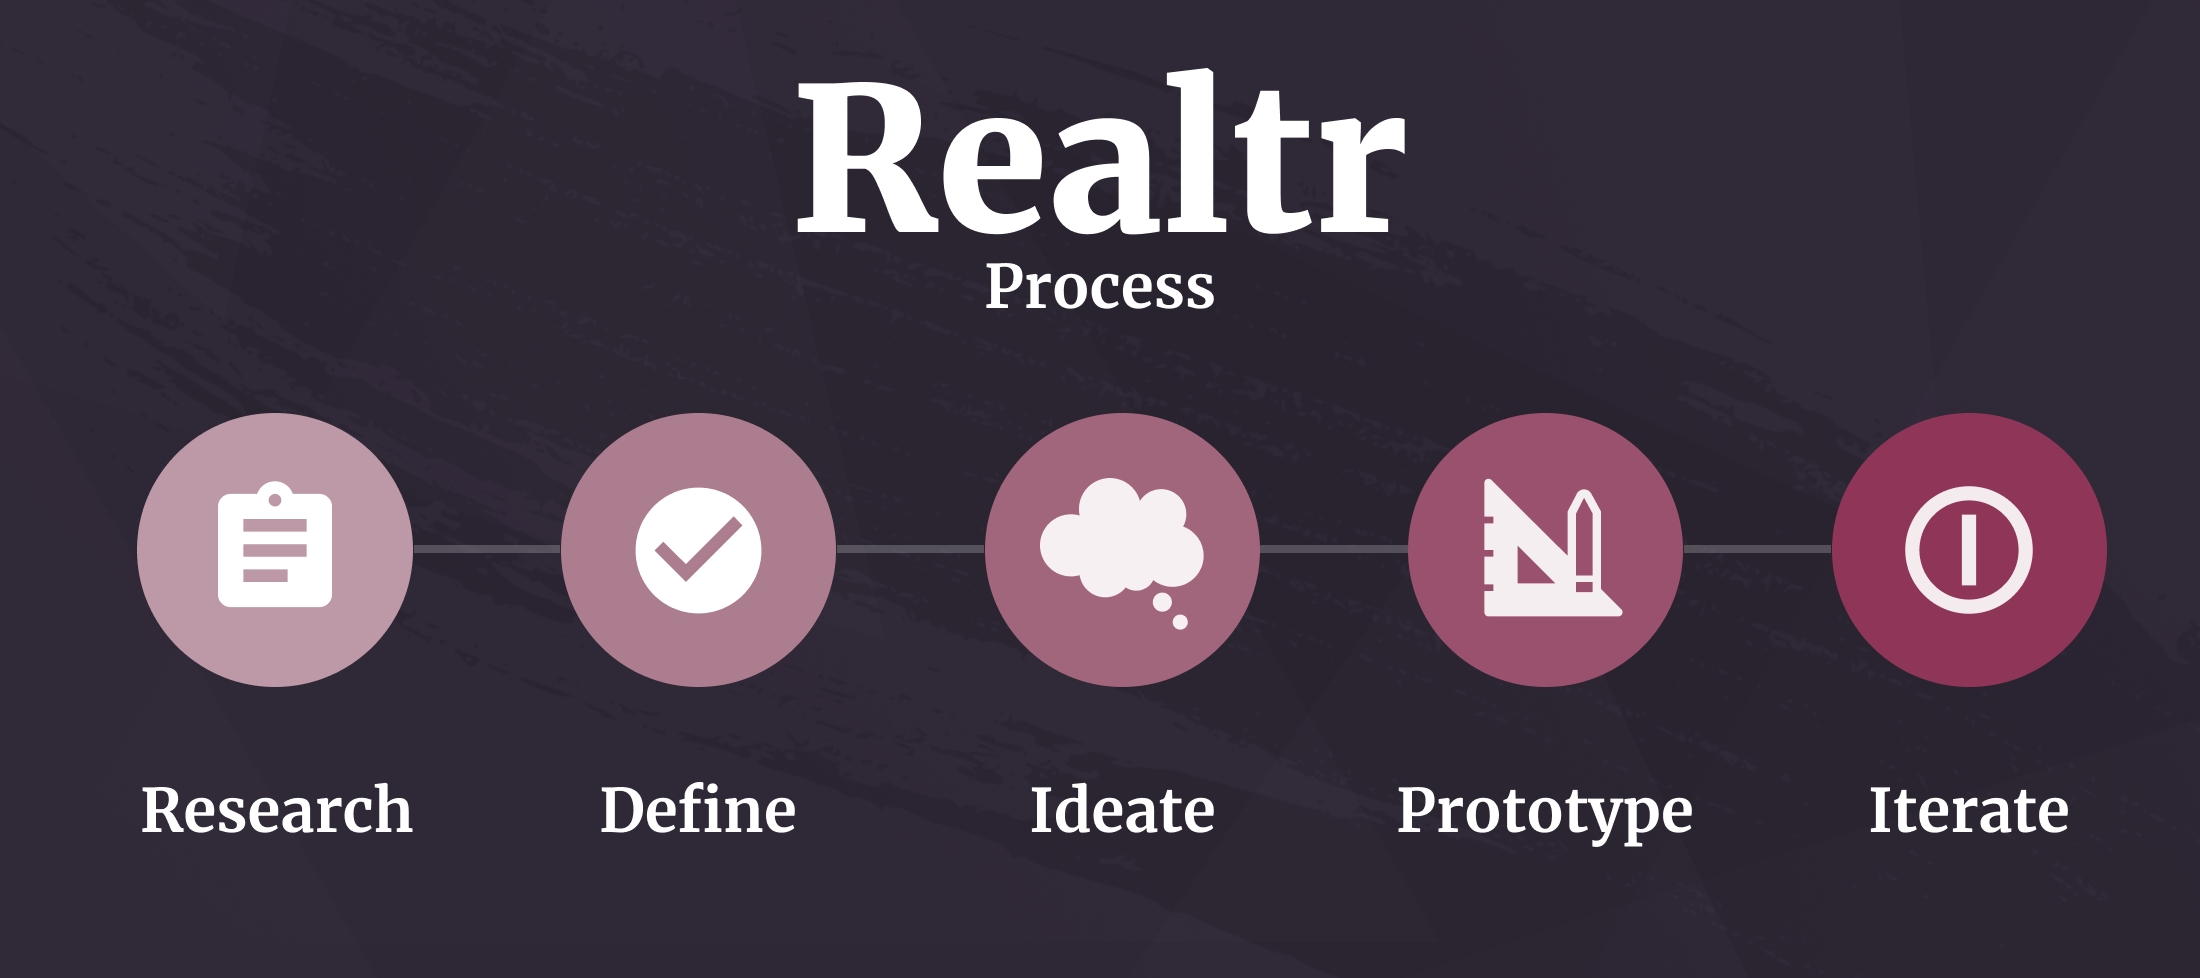 Realtr Process